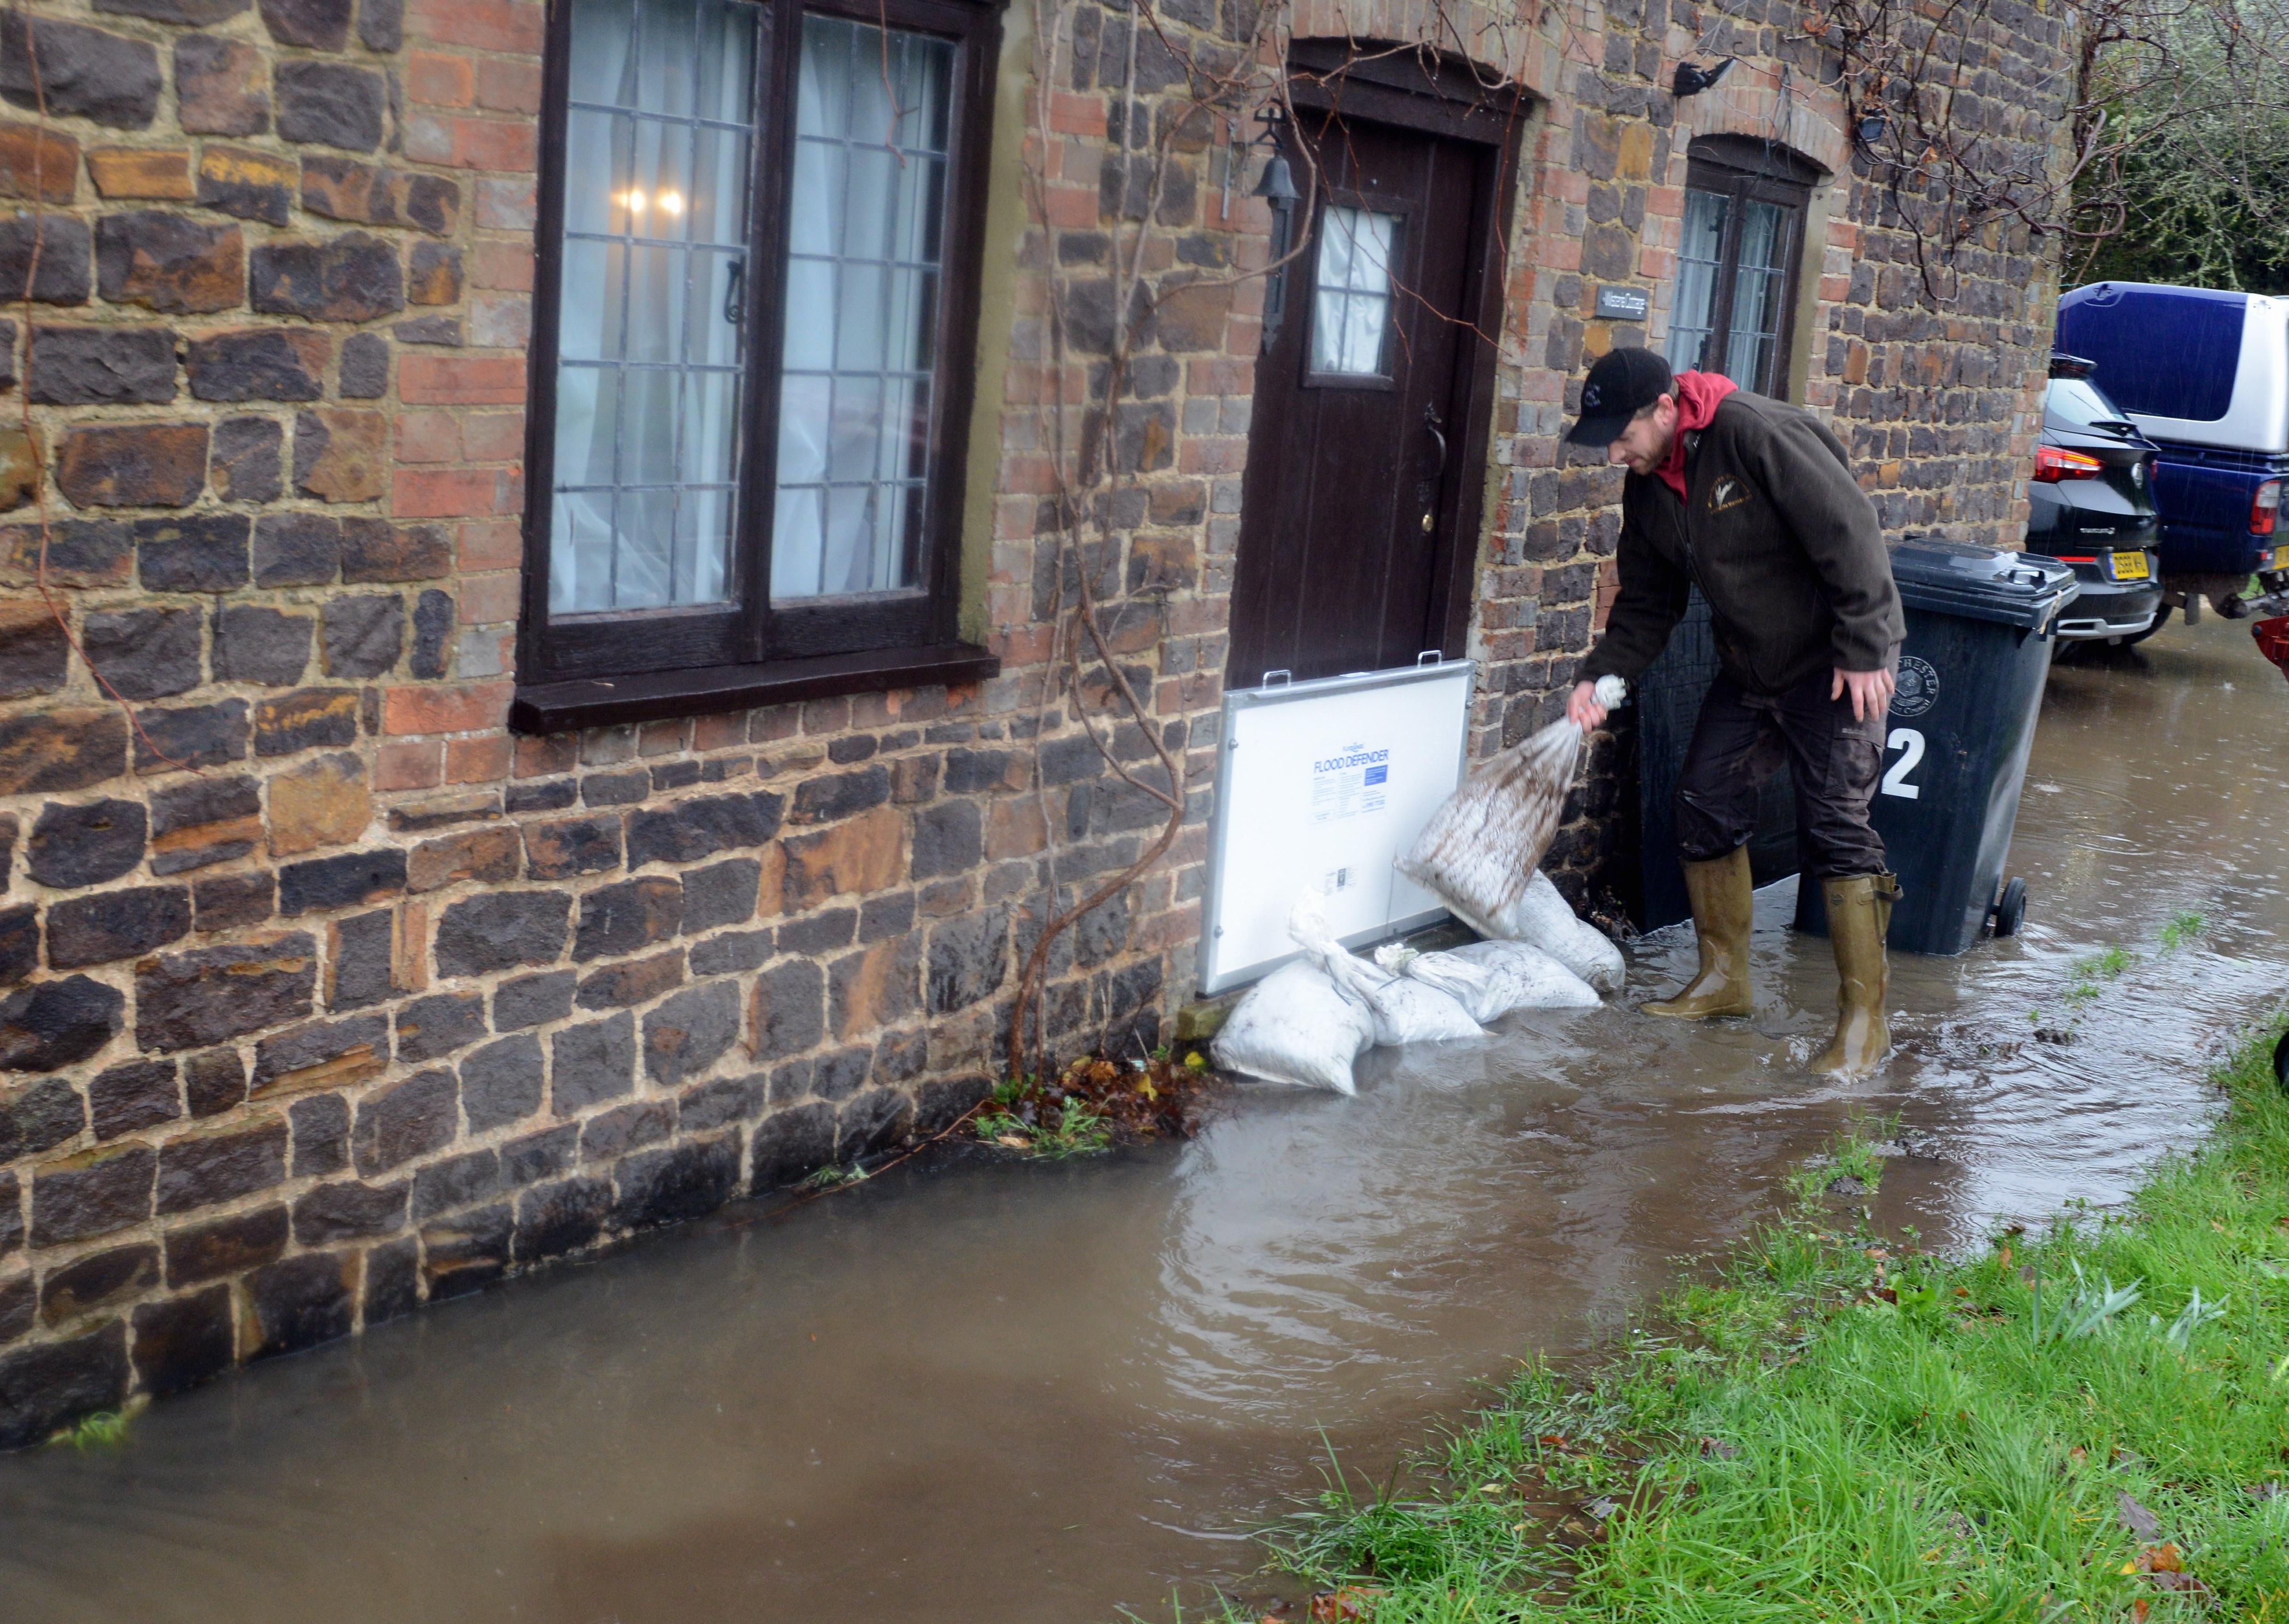 ks20062-11 Dennis Mid Pet Flood  phot kate
James McConville flood proofing his house at Fittleworth .ks20062-11 SUS-200216-184528008